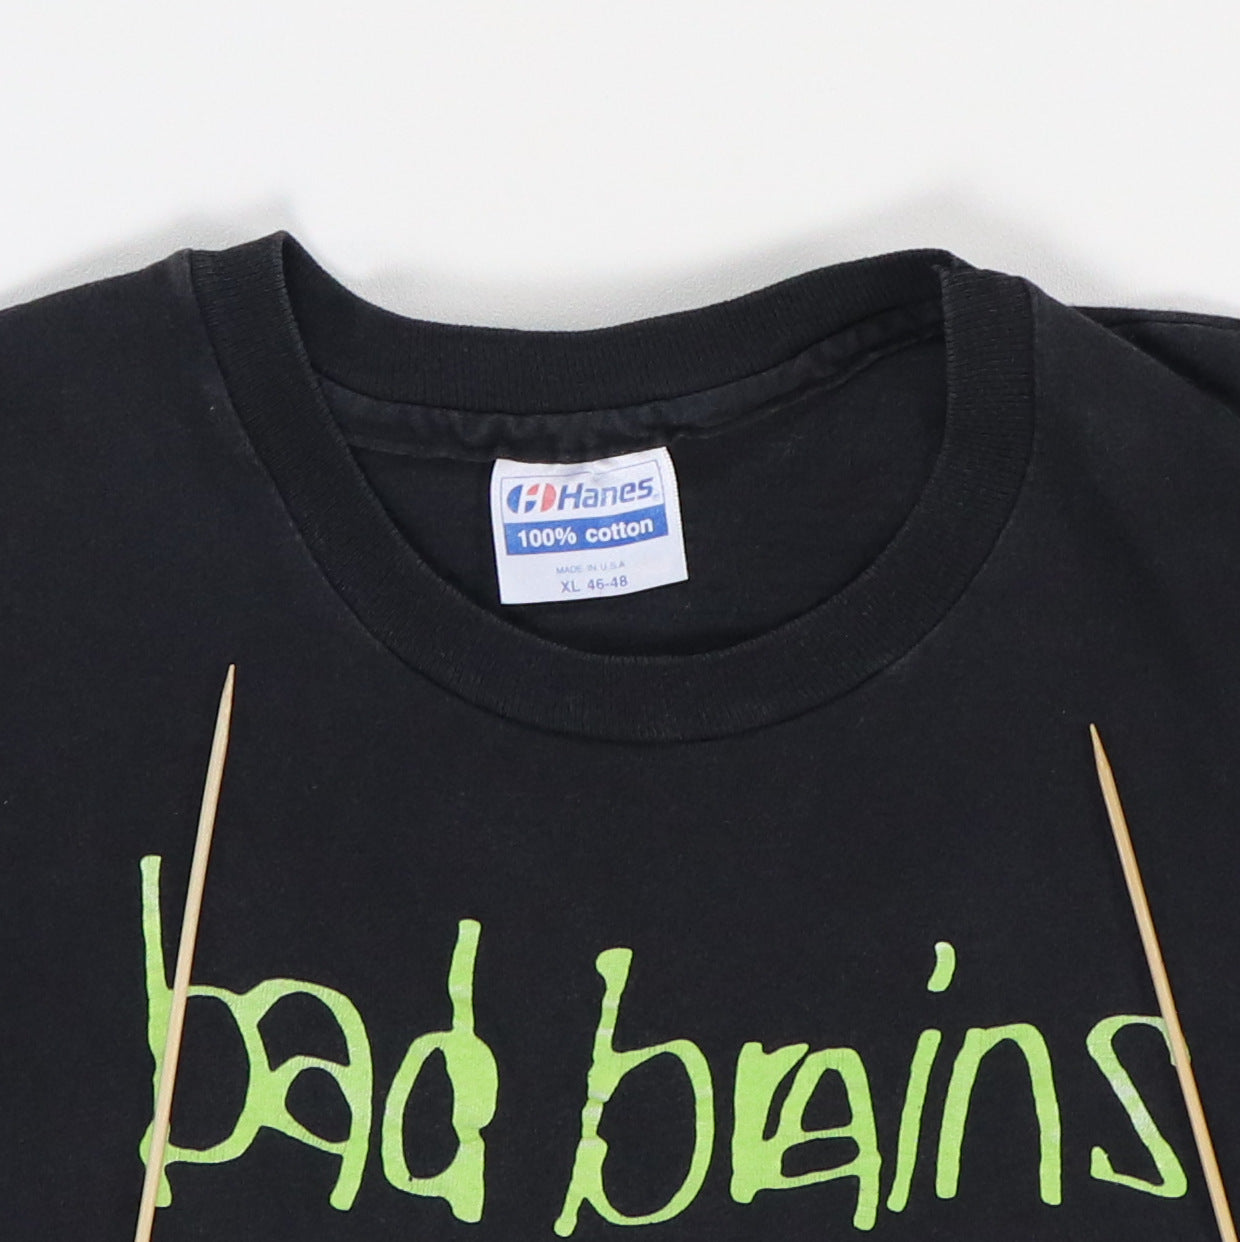 1986 Bad Brains I Against I Shirt